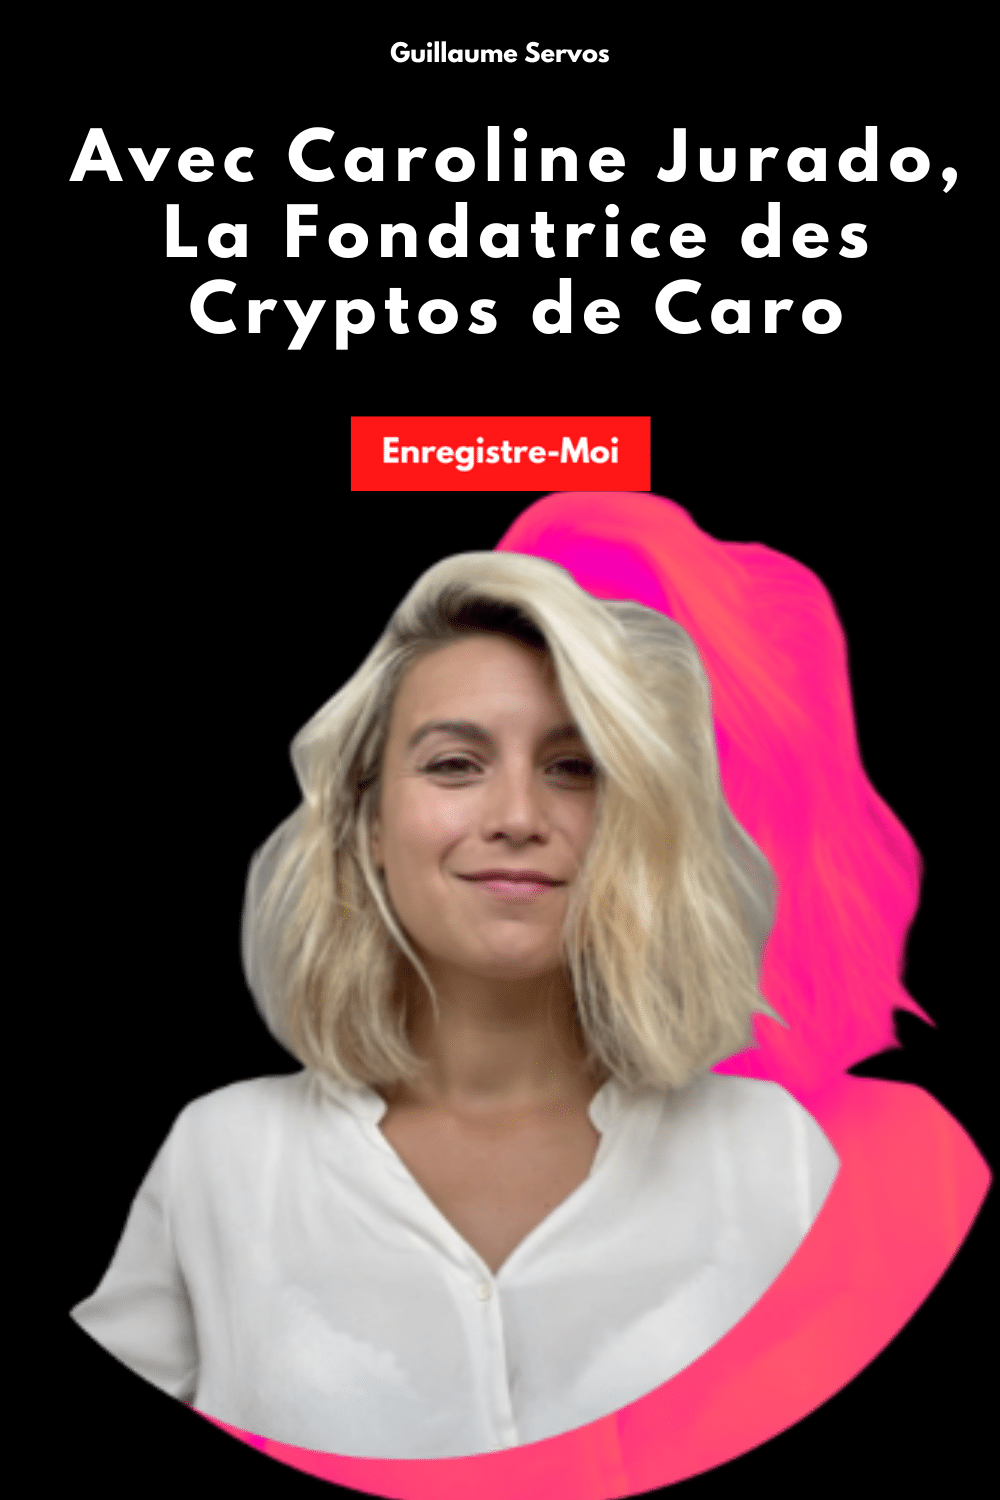 Avec Caroline Jurado, La Fondatrice des Cryptos de Caro